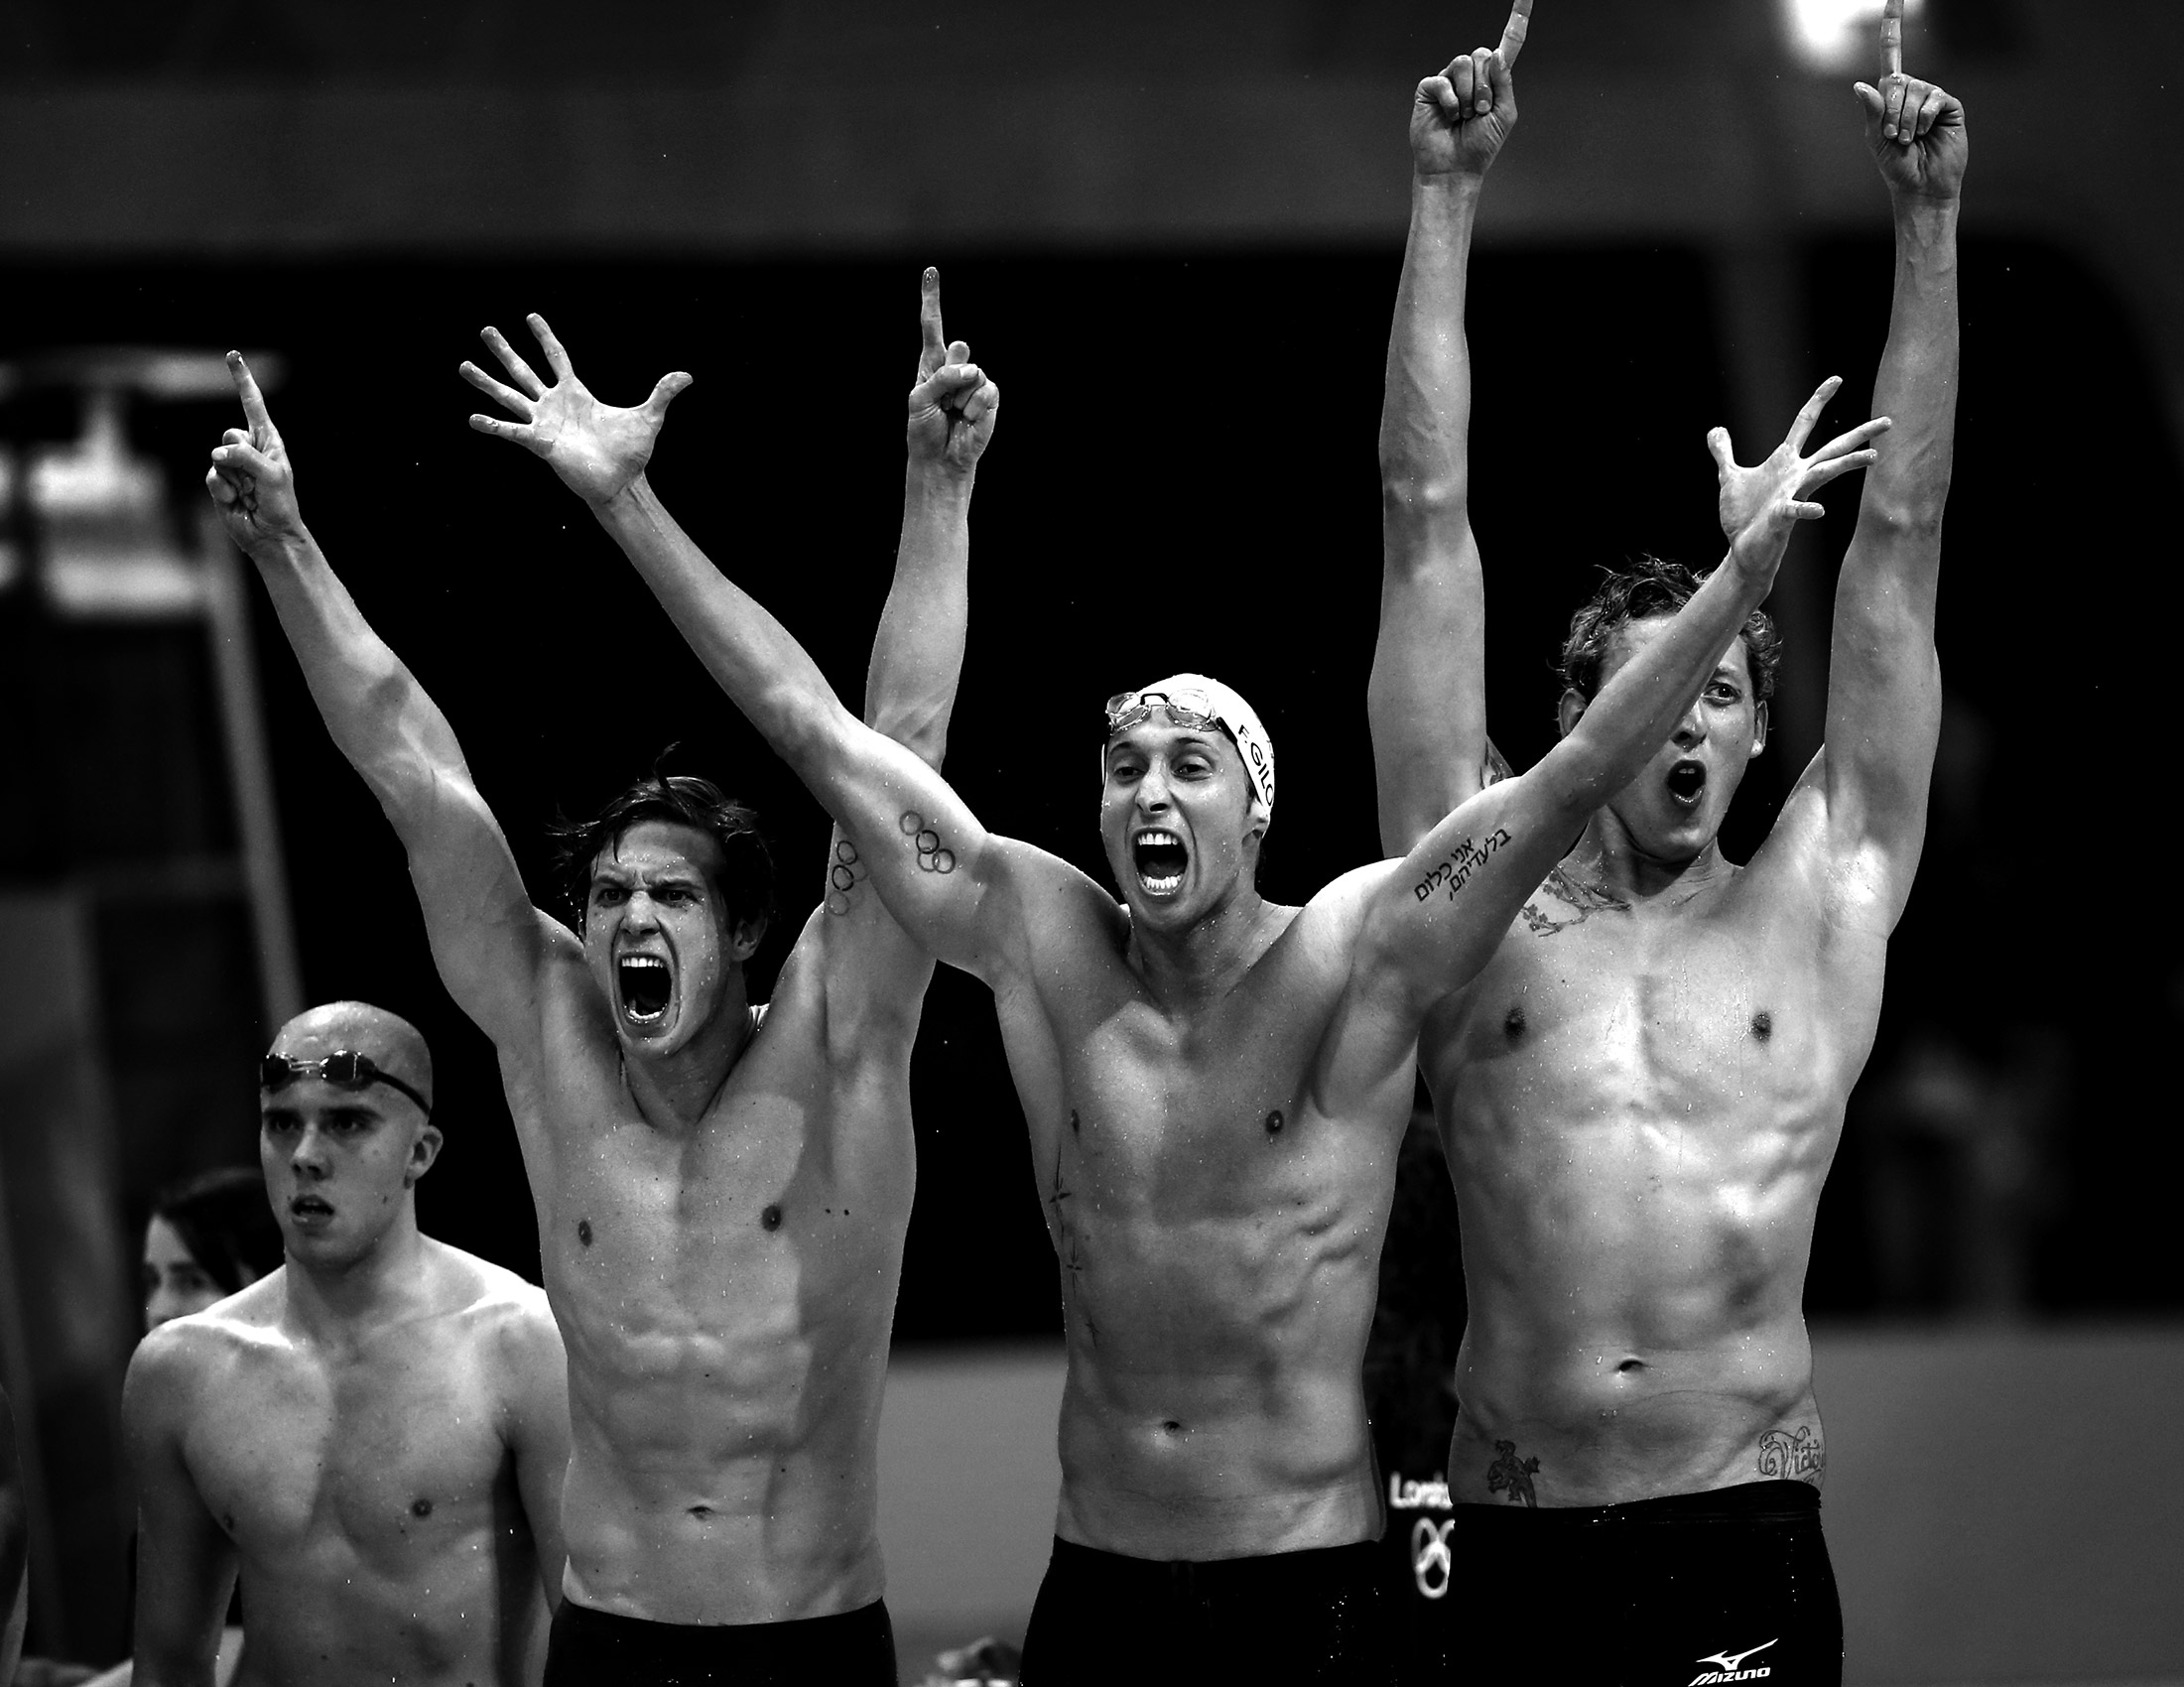   London Olympics 2012 - Men